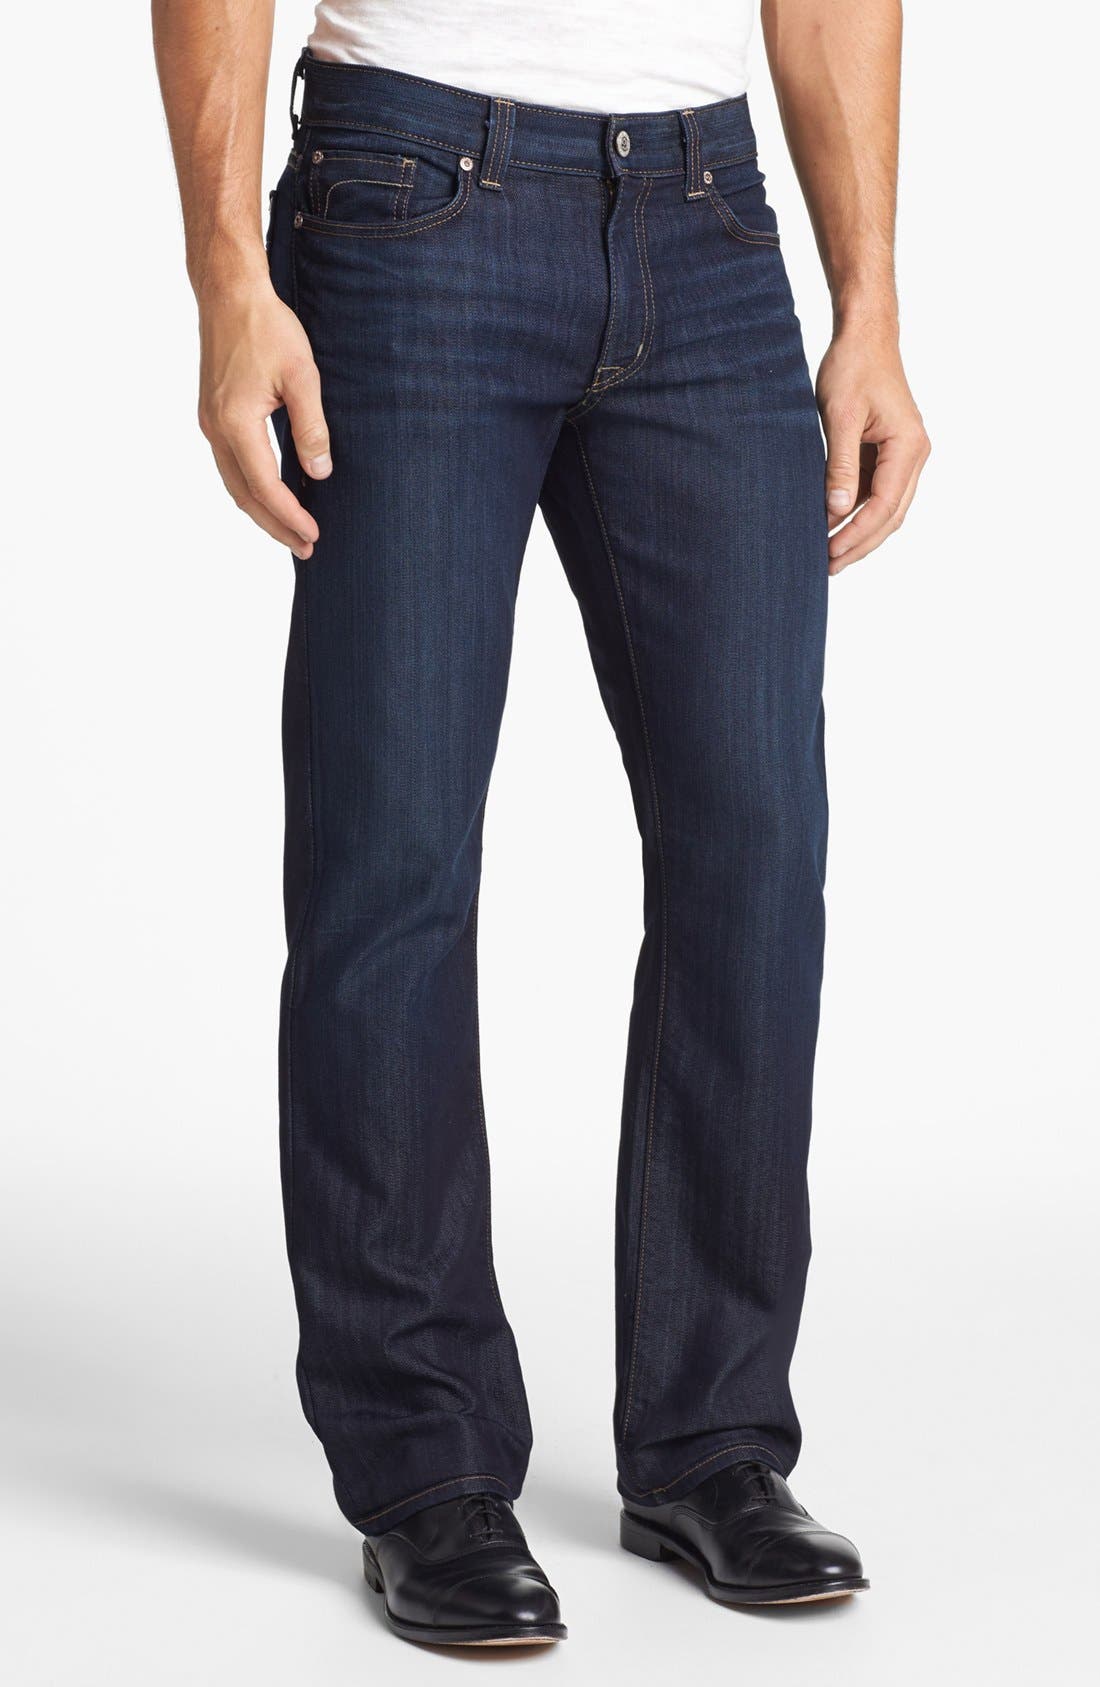 fidelity jeans nordstrom